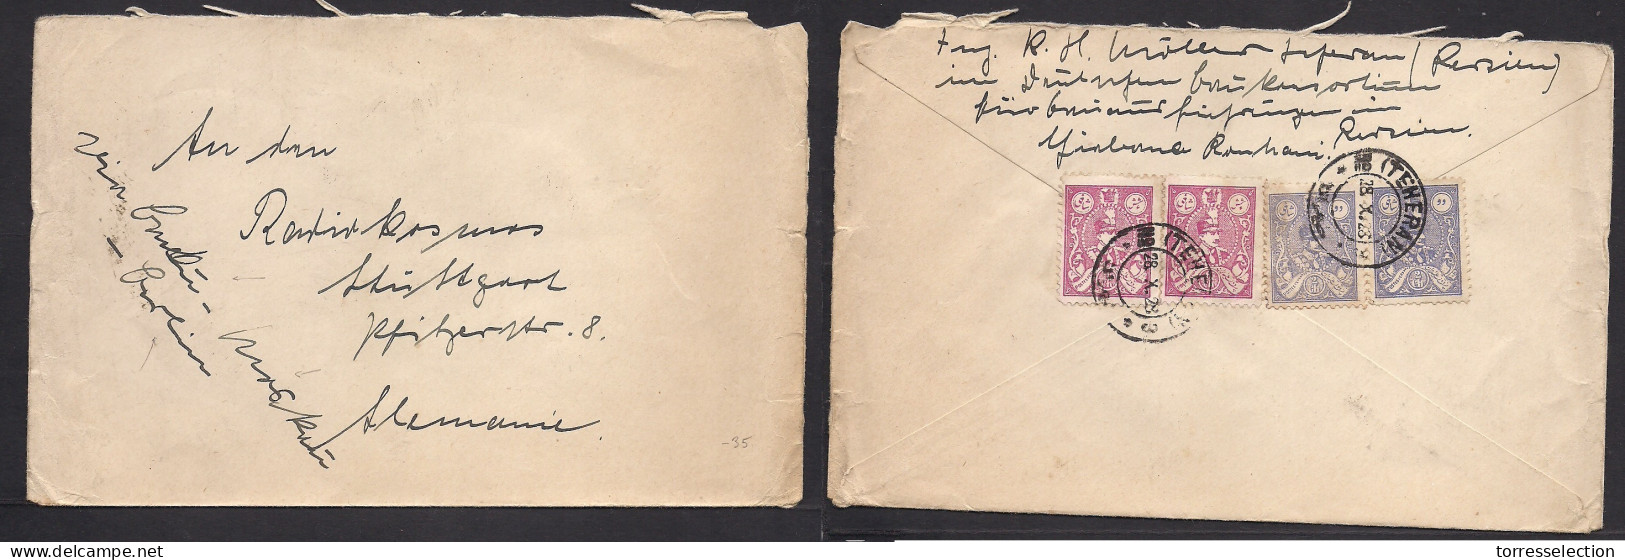 PERSIA. 1928 (28 Oct) Teheran - Germany, Stuttgart. Reverse Multifkd Env. Airmail Transited Endorsement On Front. XSALE. - Irán